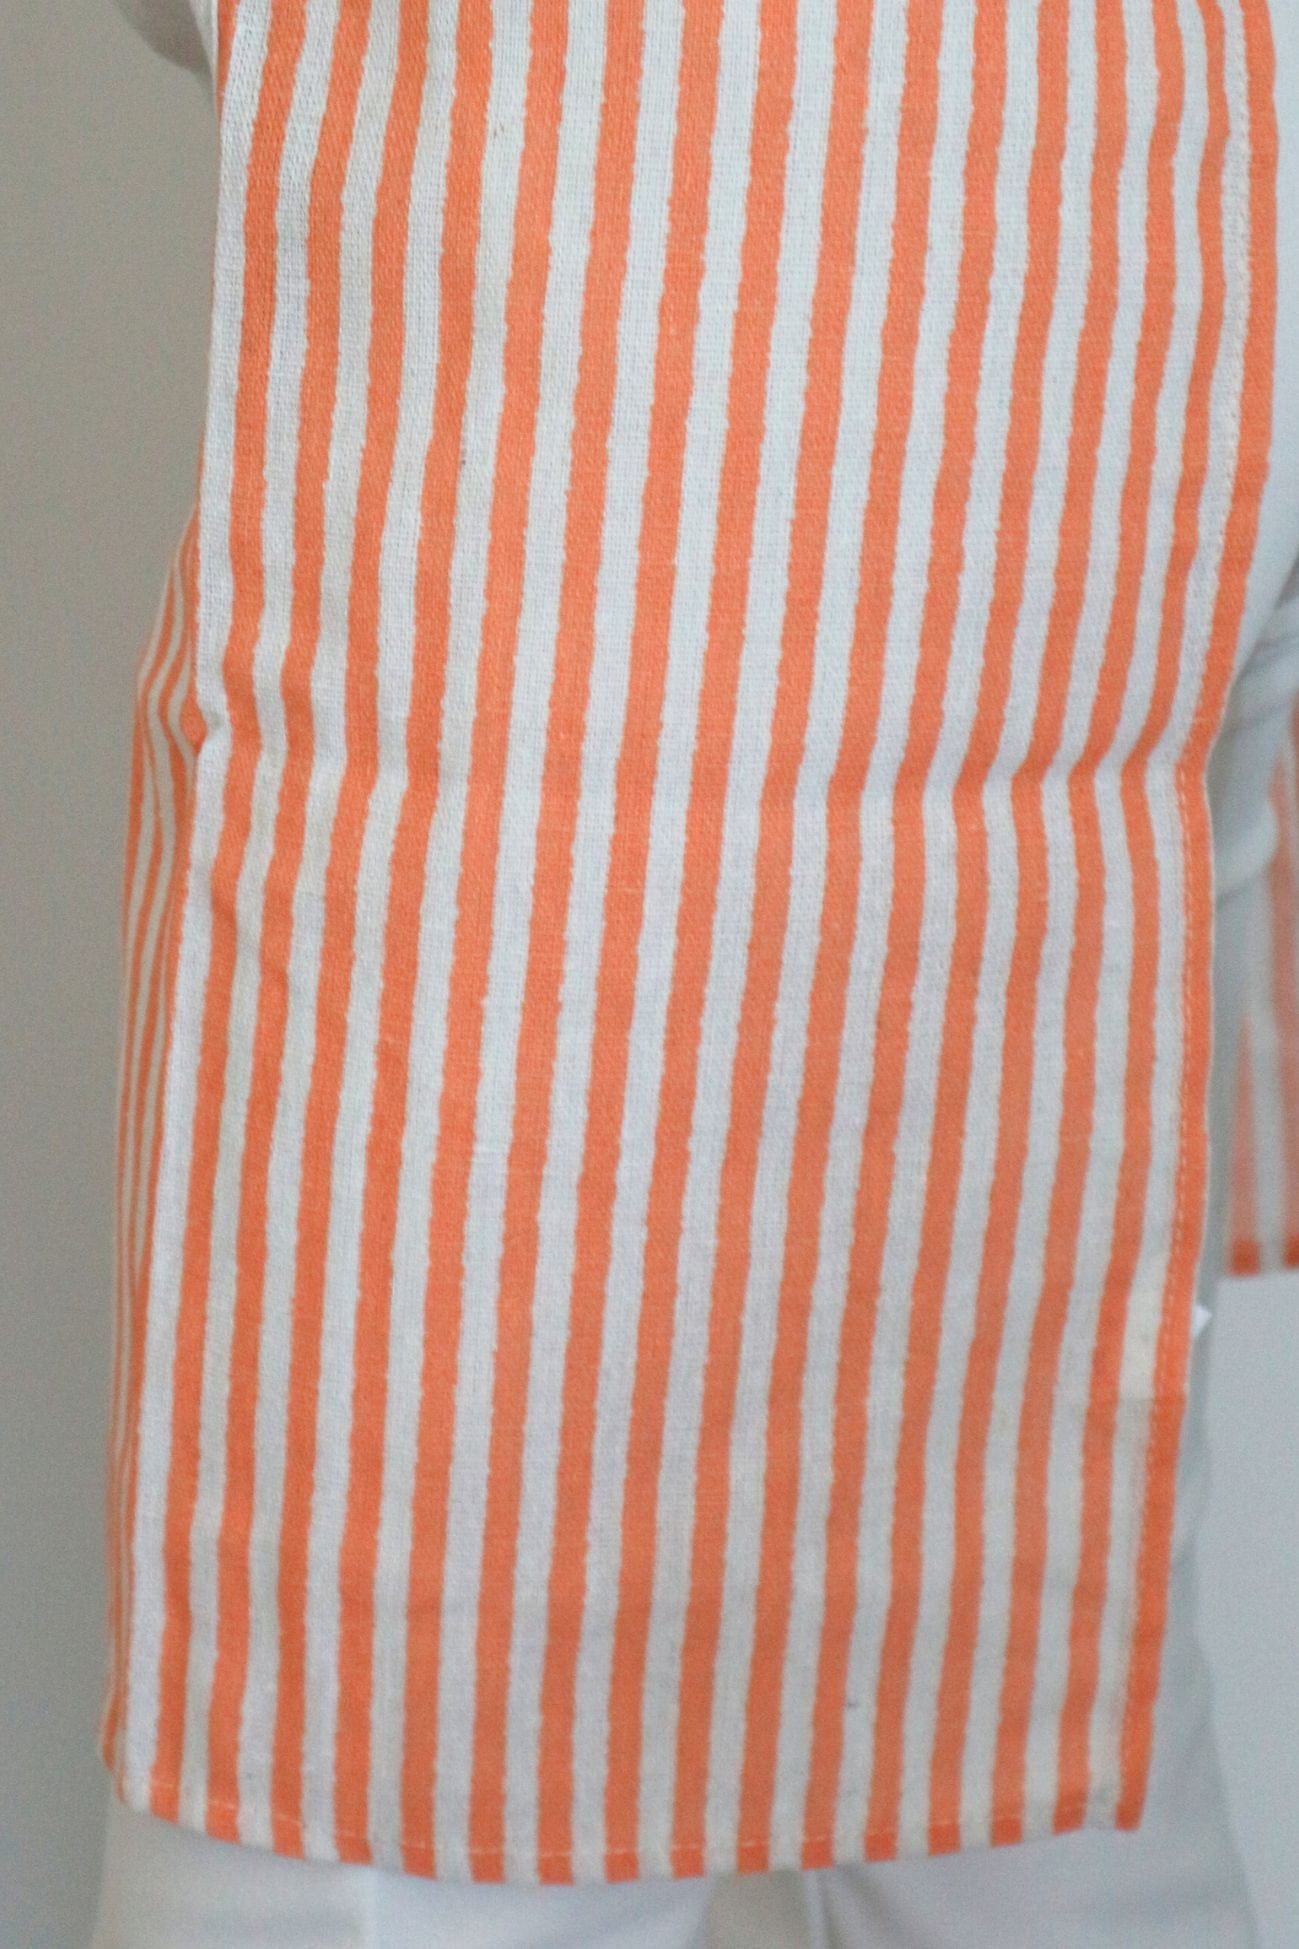 Item International Emilie Emilie - Grembiule arancione a righe con tasca | Item International